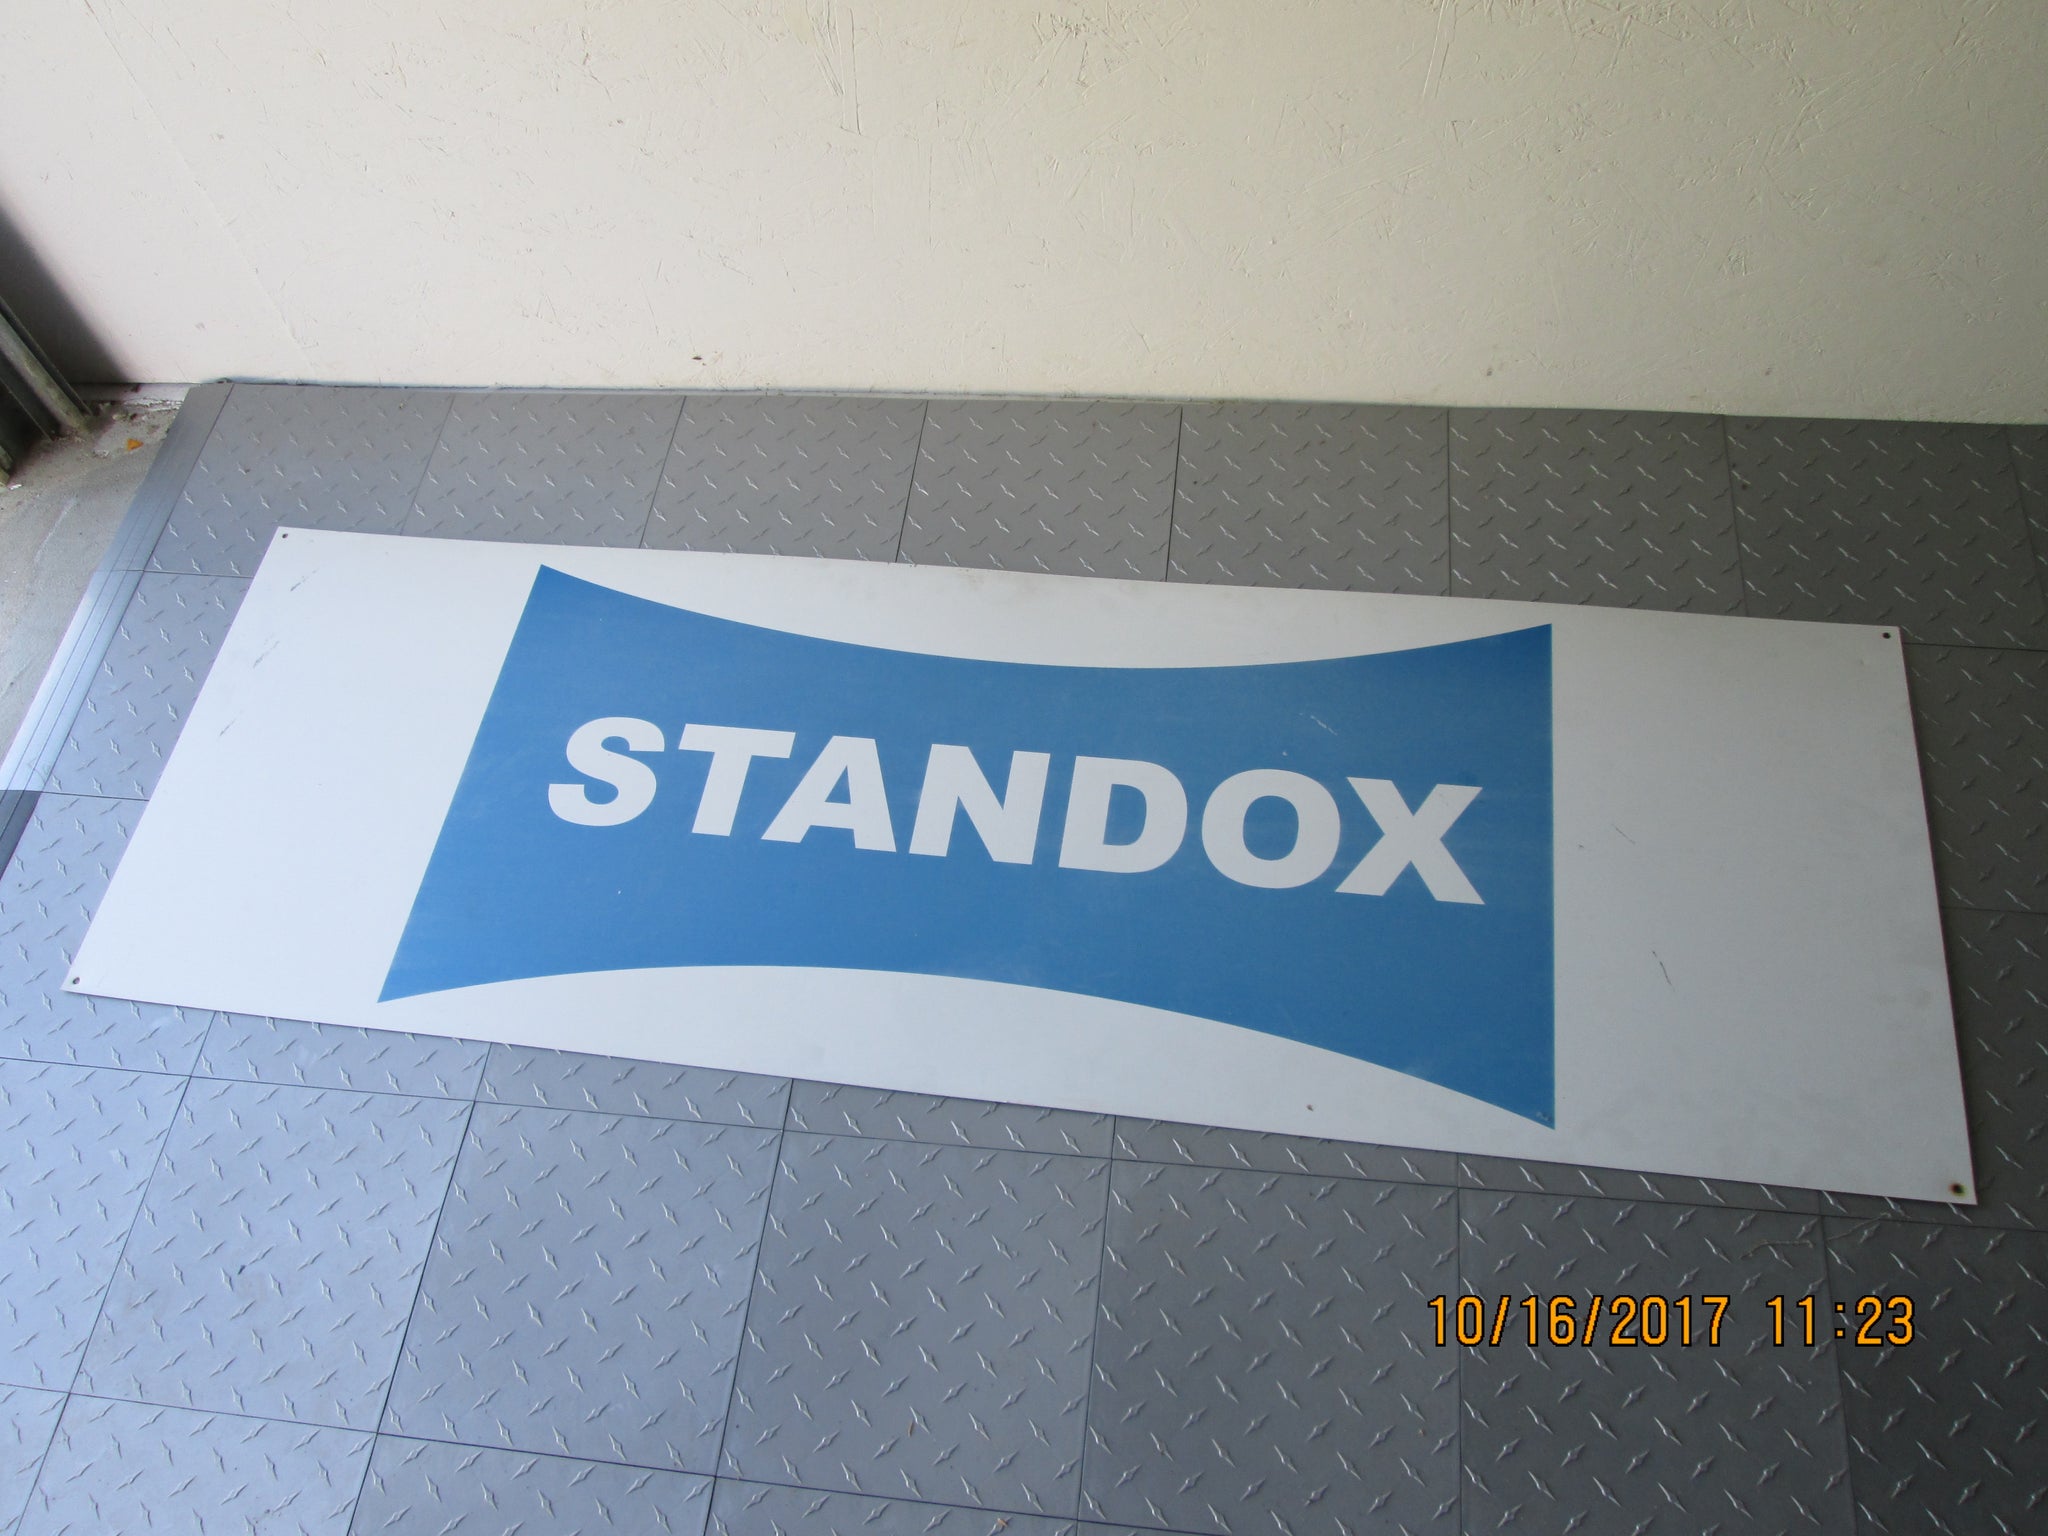 Metal Standox Car Paint advertising sign